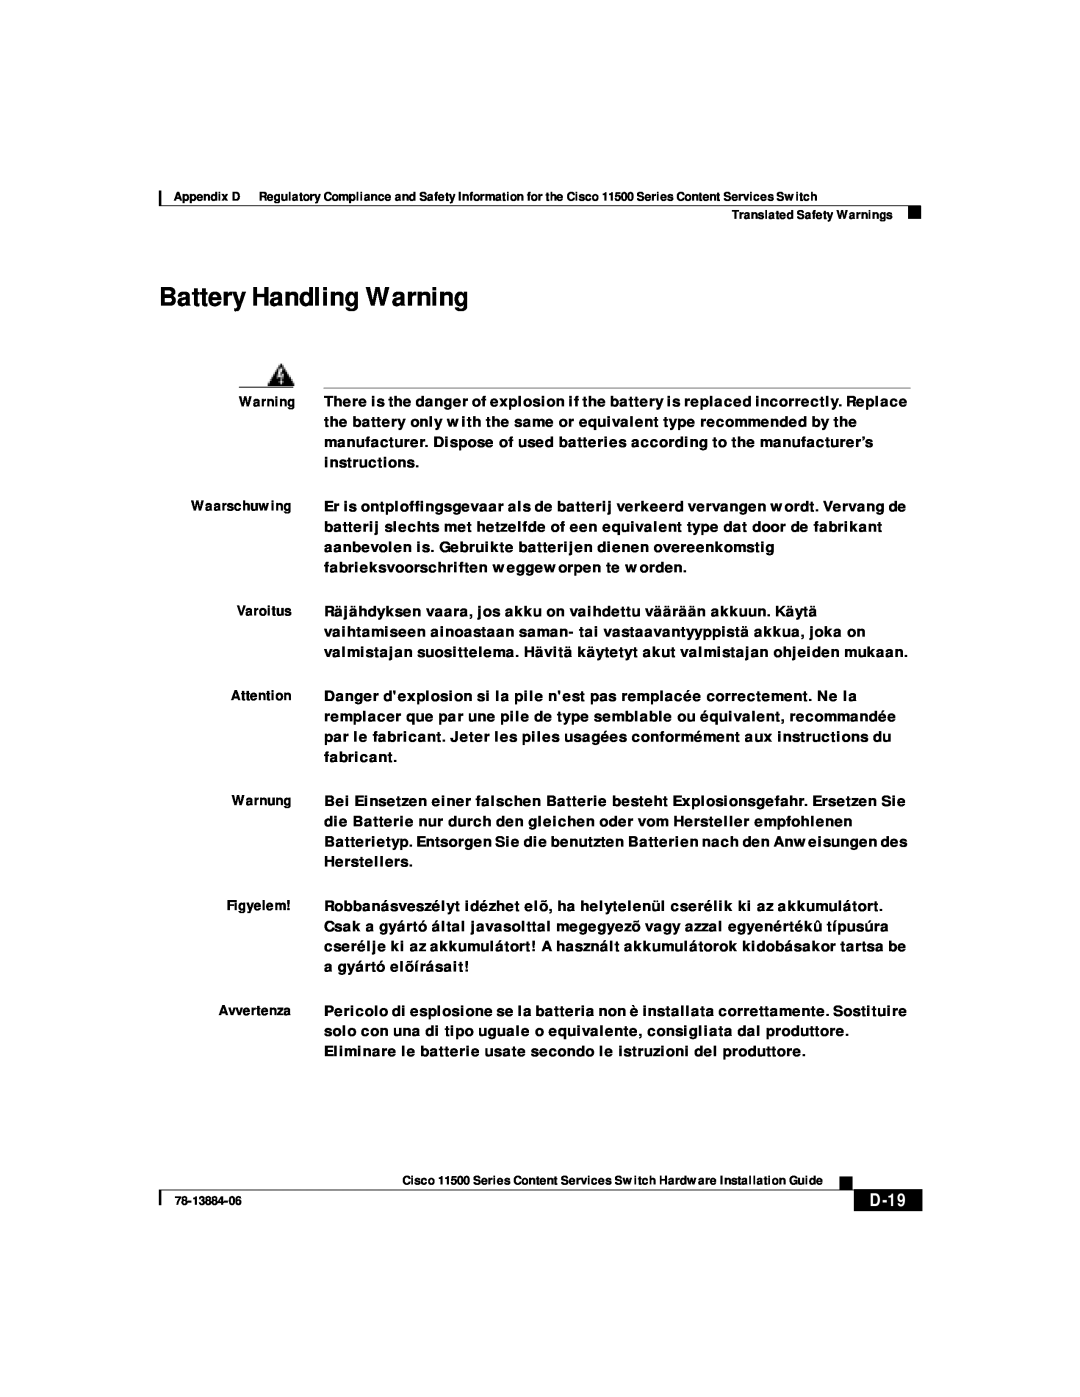 Cisco Systems 11500 Series manual Battery Handling Warning, D-19 